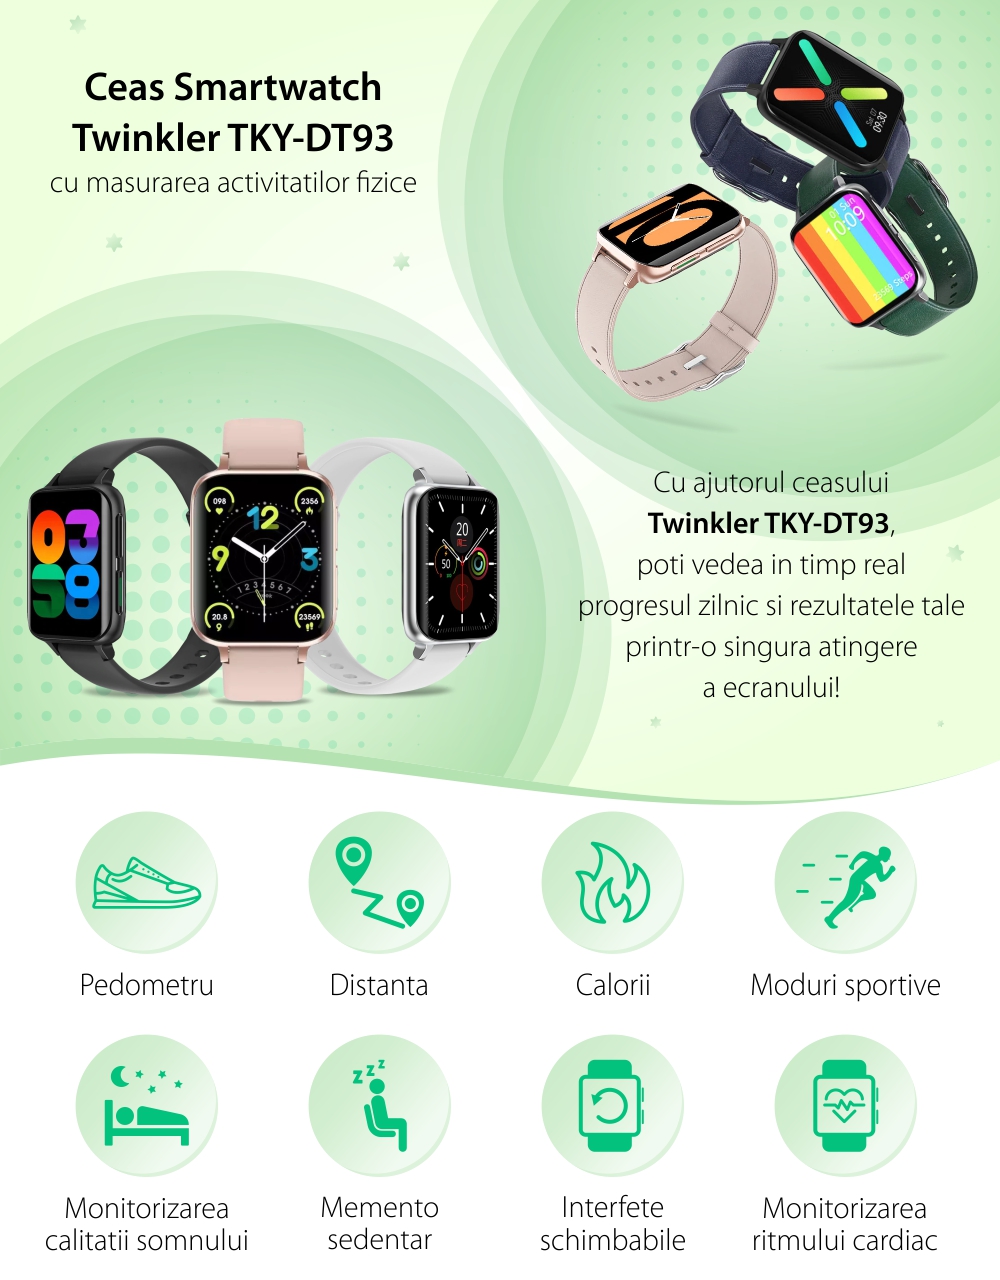 Ceas smartwatch Twinkler TKY-DT93, Bratara piele, Verde cu ECG, Tensiune arteriala, Ritm cardiac, Oxigen din sange, Interfata custom, Memento sedentar, Monitorizarea somnului, Pedometru, Moduri sportive